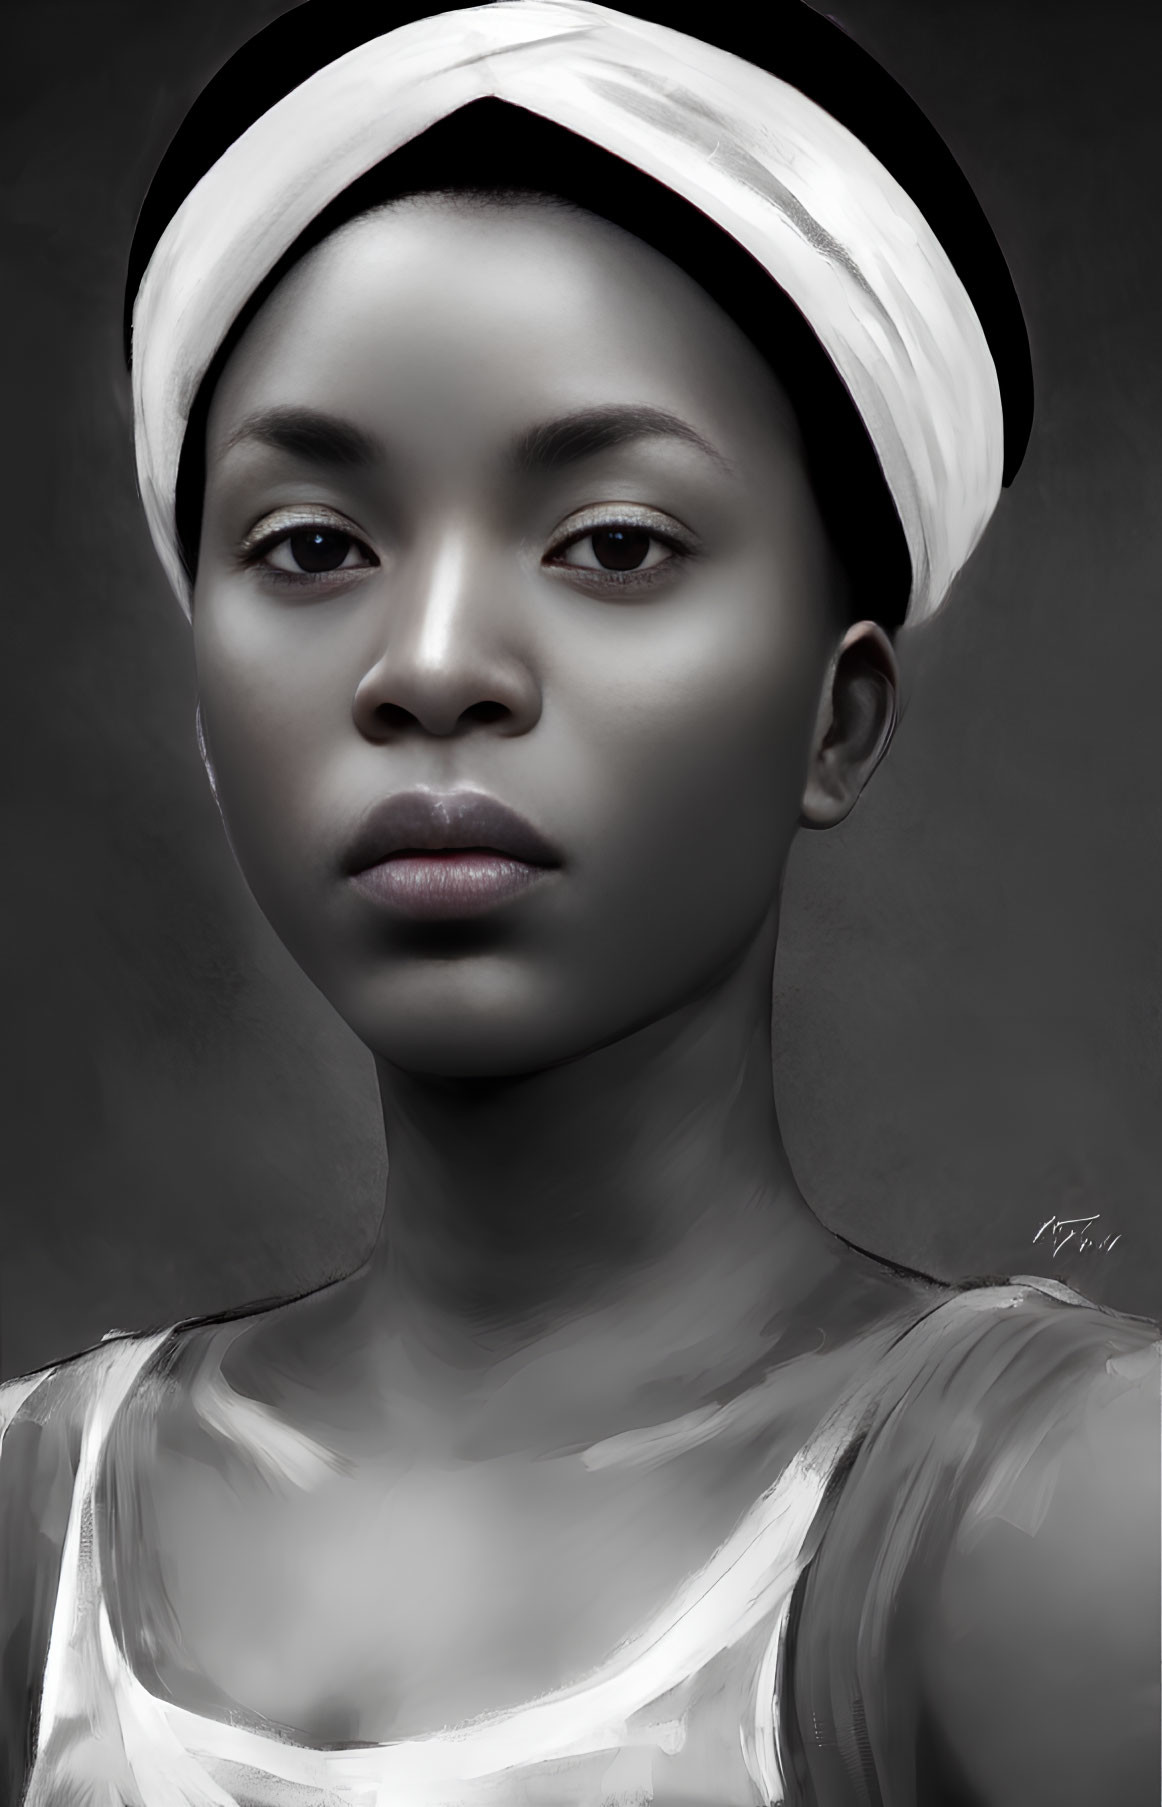 Grayscale portrait of woman in head wrap against dark background